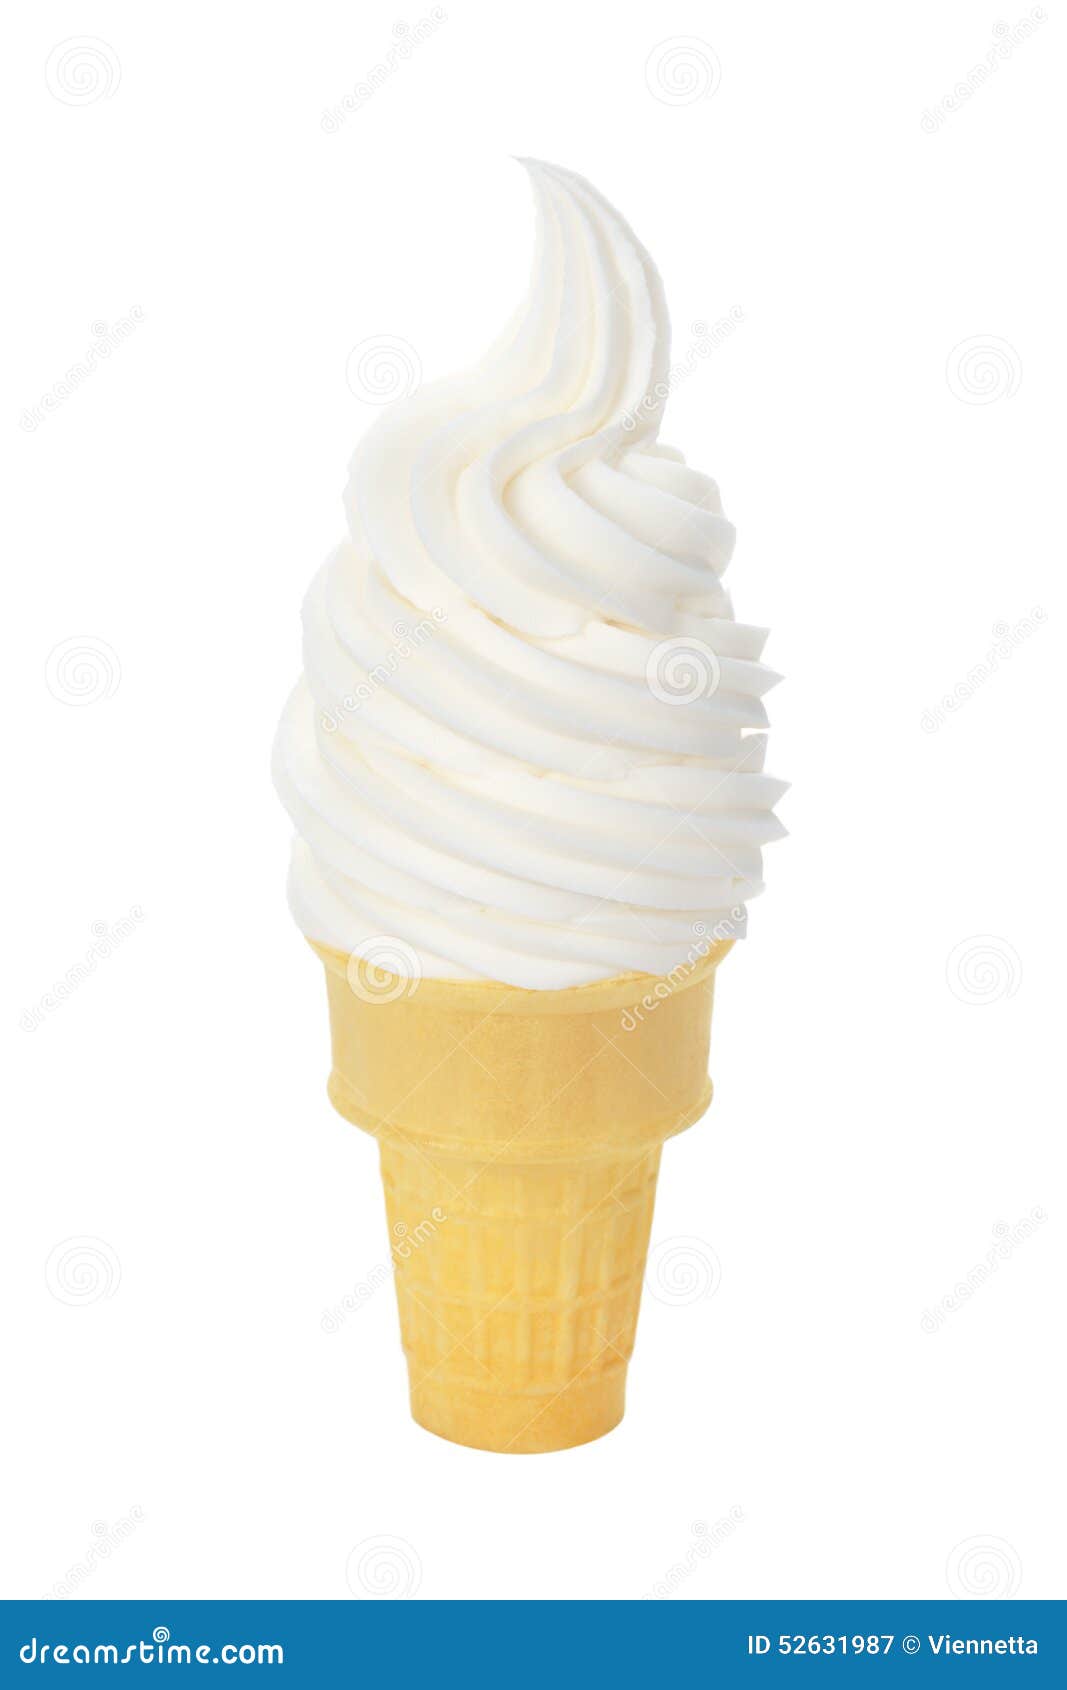 vanilla soft serve ice cream in wafer cone on white background